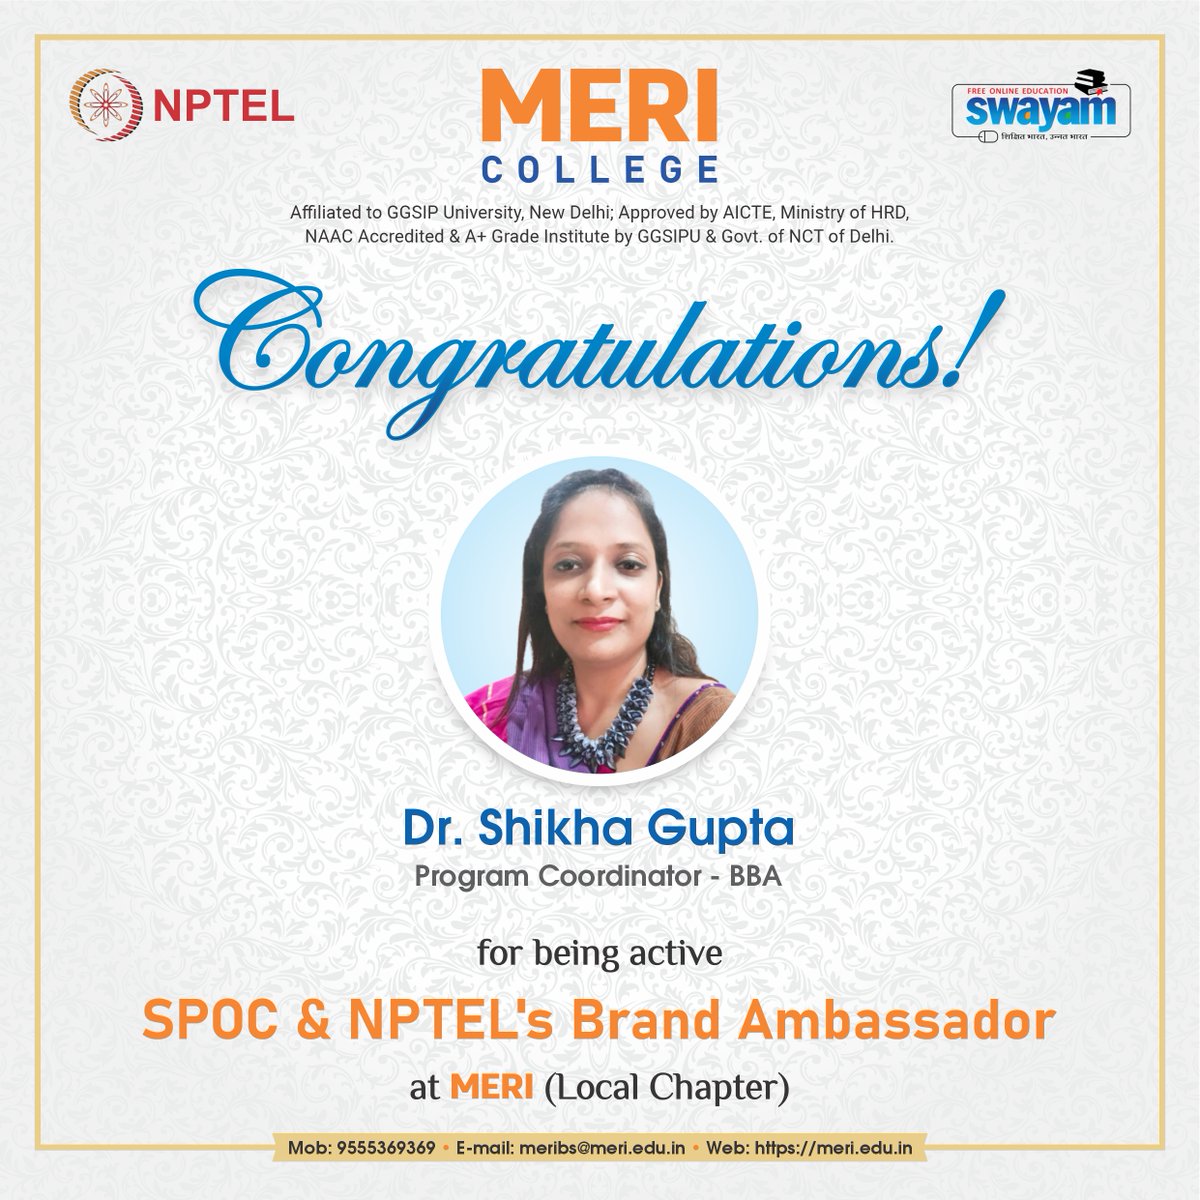 Congratulations to Dr. Shikha Gupta for being active SPOC & NPTEL's Brand Ambassador at MERI (Local Chapter).

#MERICollege #MERICampus #MERIGroup #IPUniversity #congratulations #goodluck #bba #mba #bcom #managementcollege